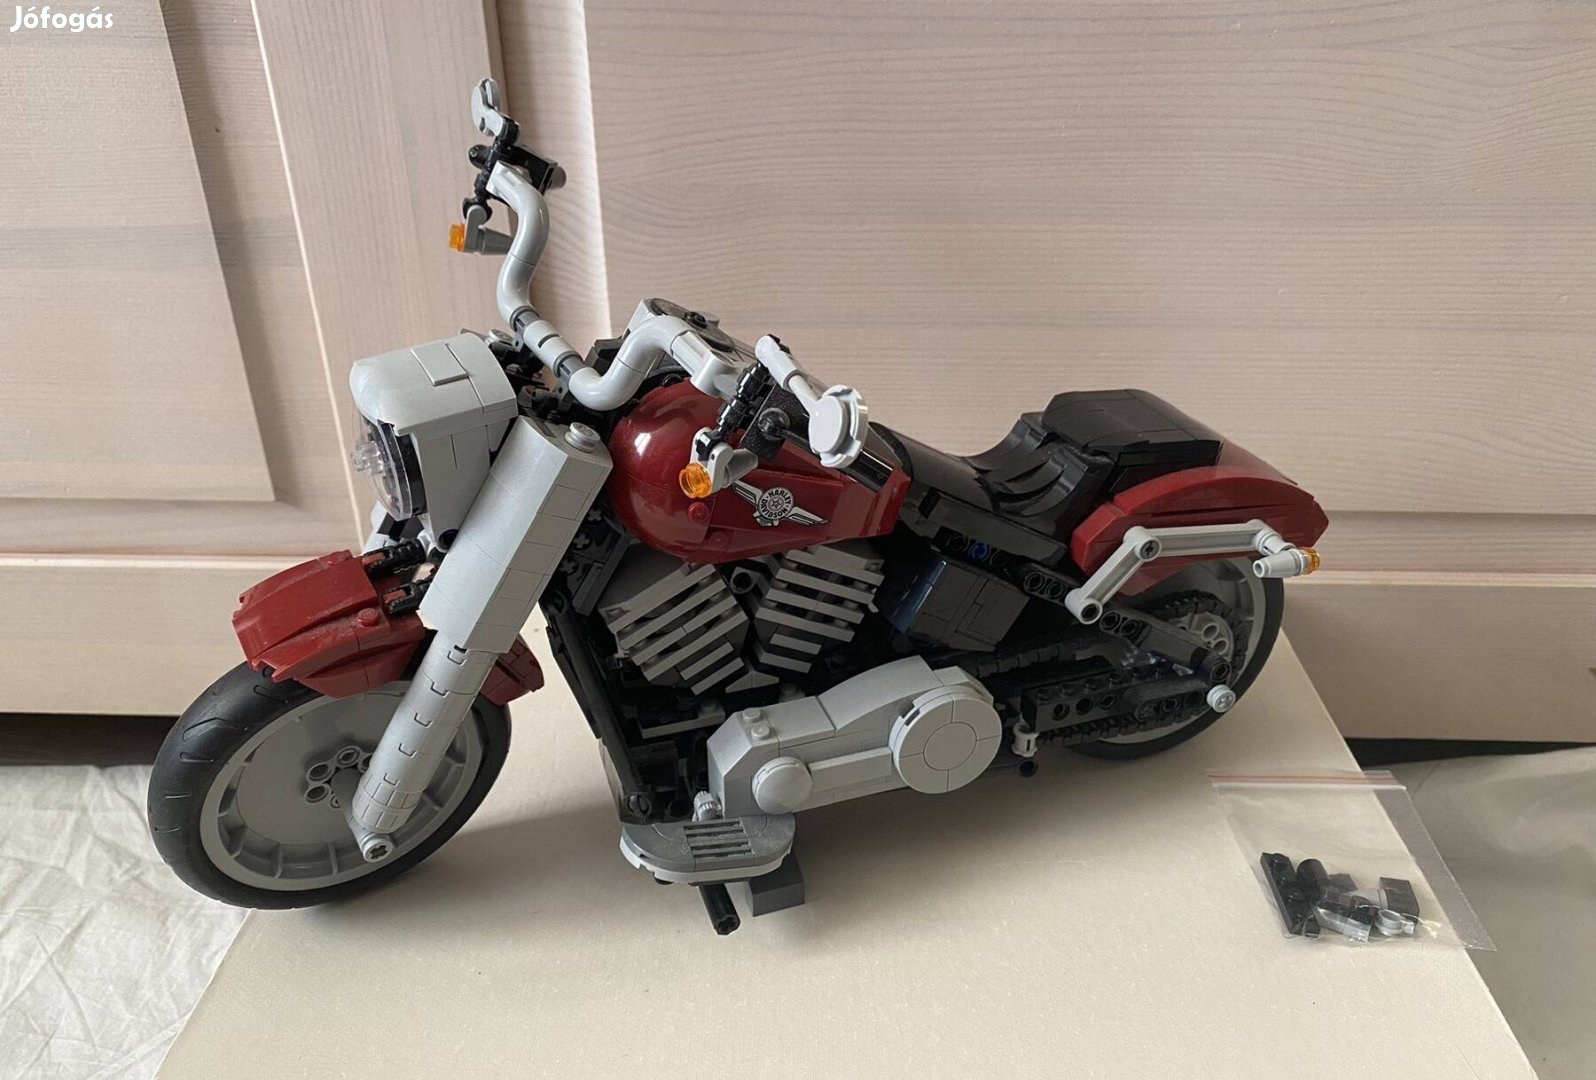 Lego 10269 Harley-Davidson motor